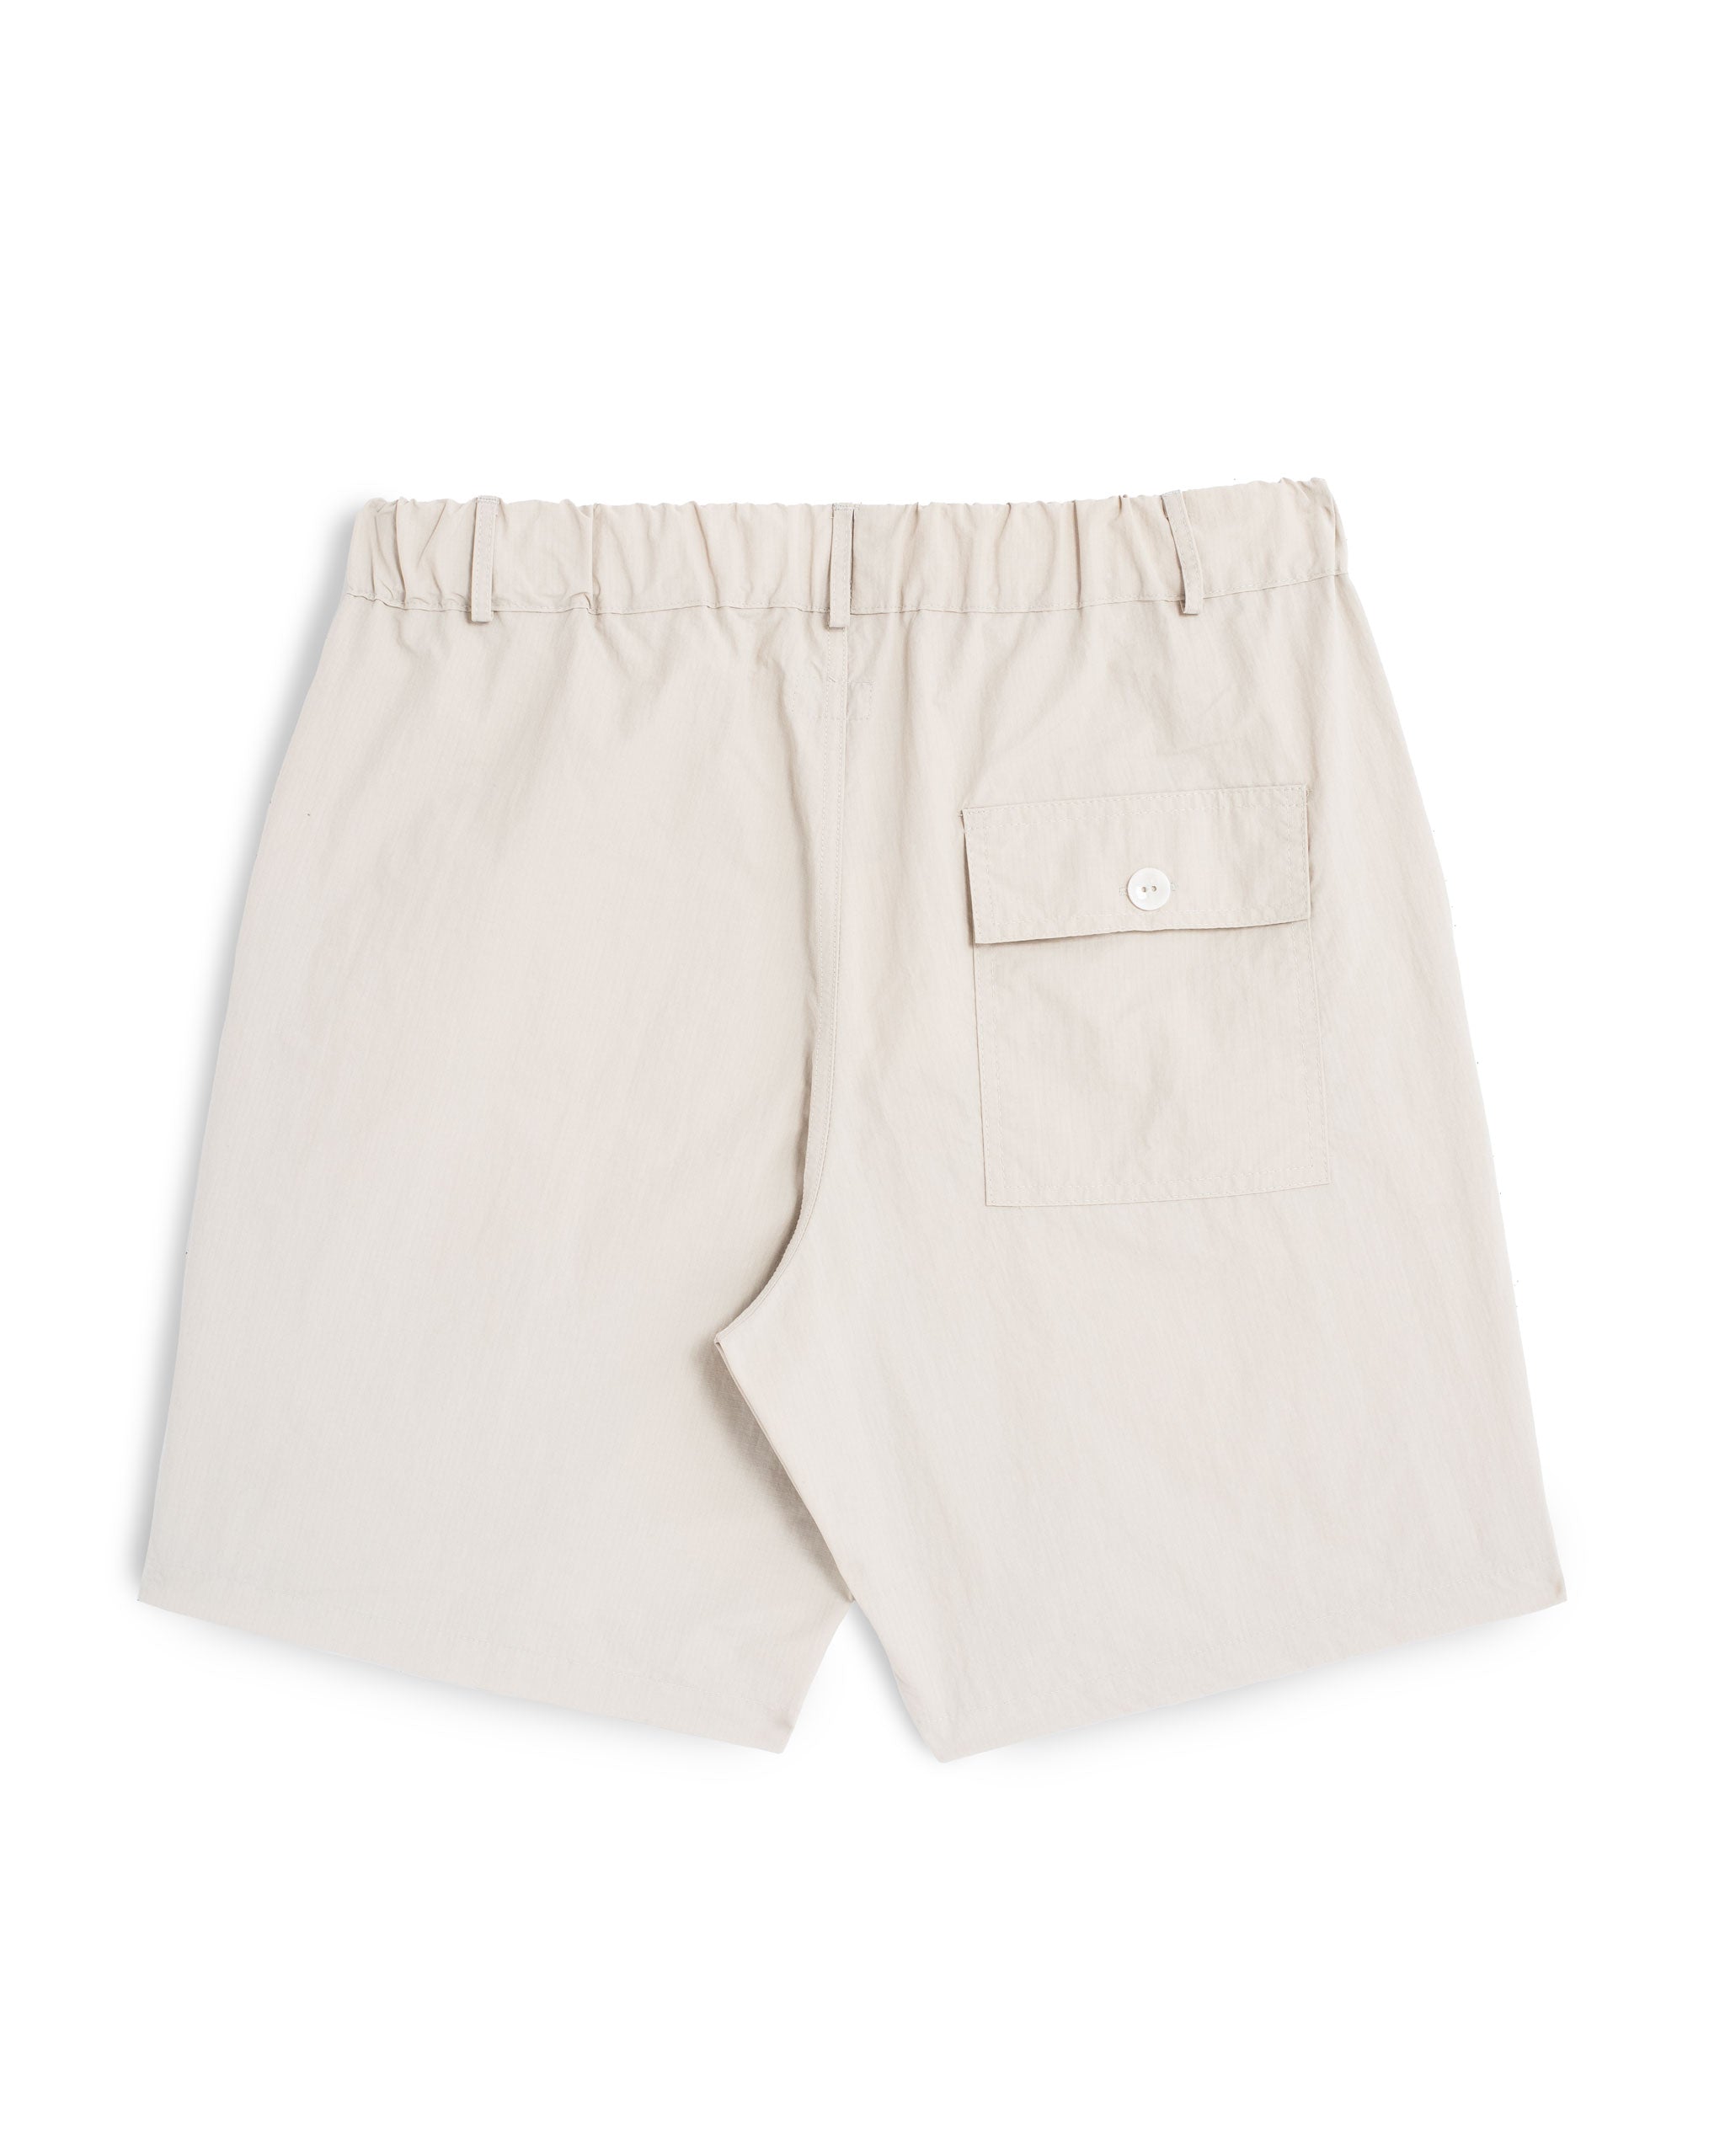 back shot of Cream utility shorts in Ripstop nylon fabric